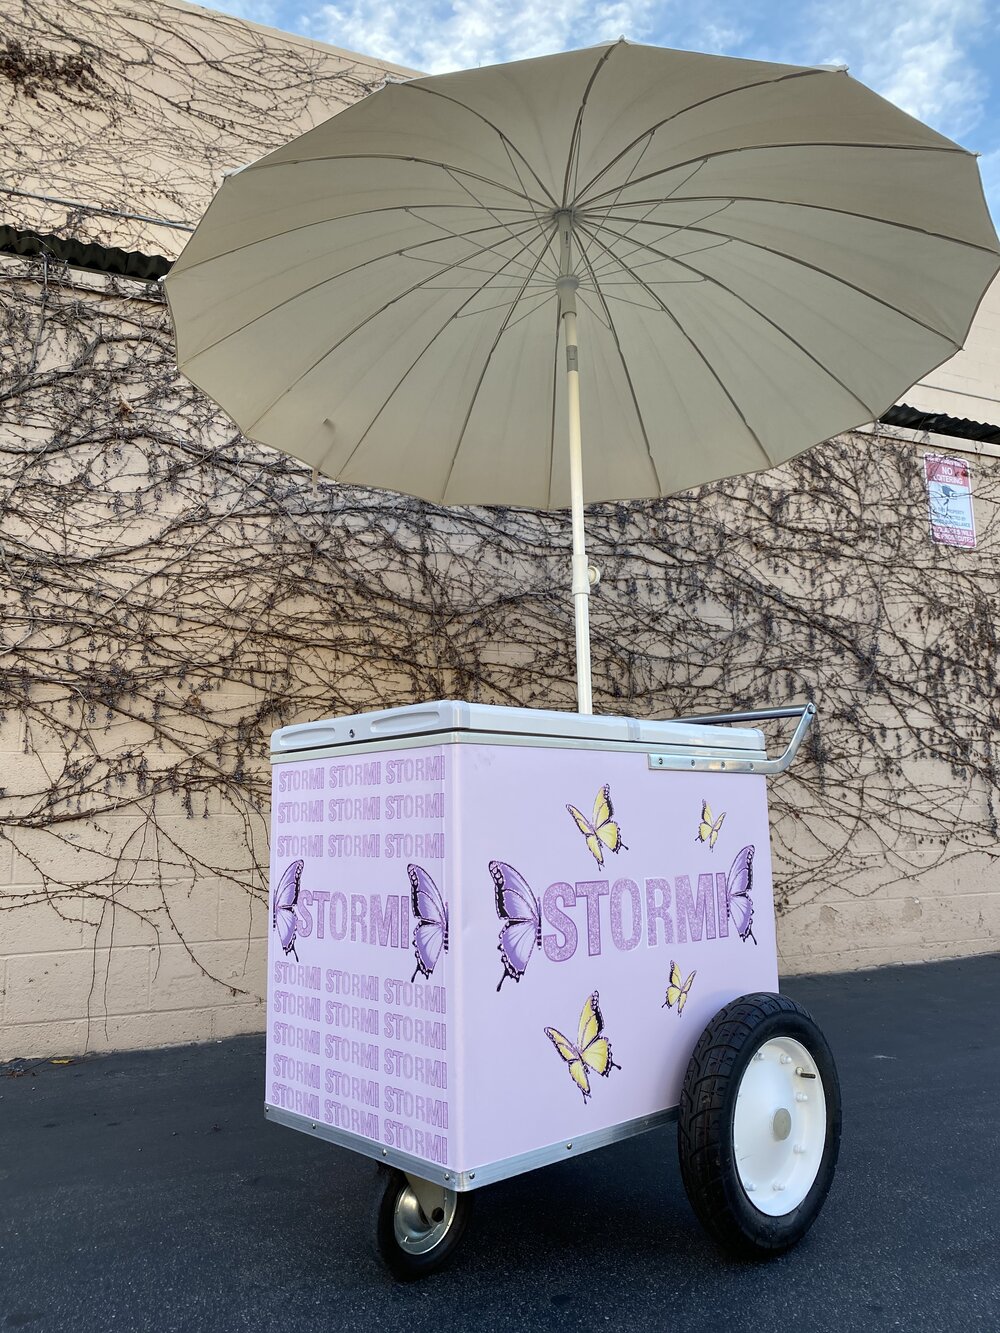 Ice Cream Cart Rentals - My Florida Party Rental